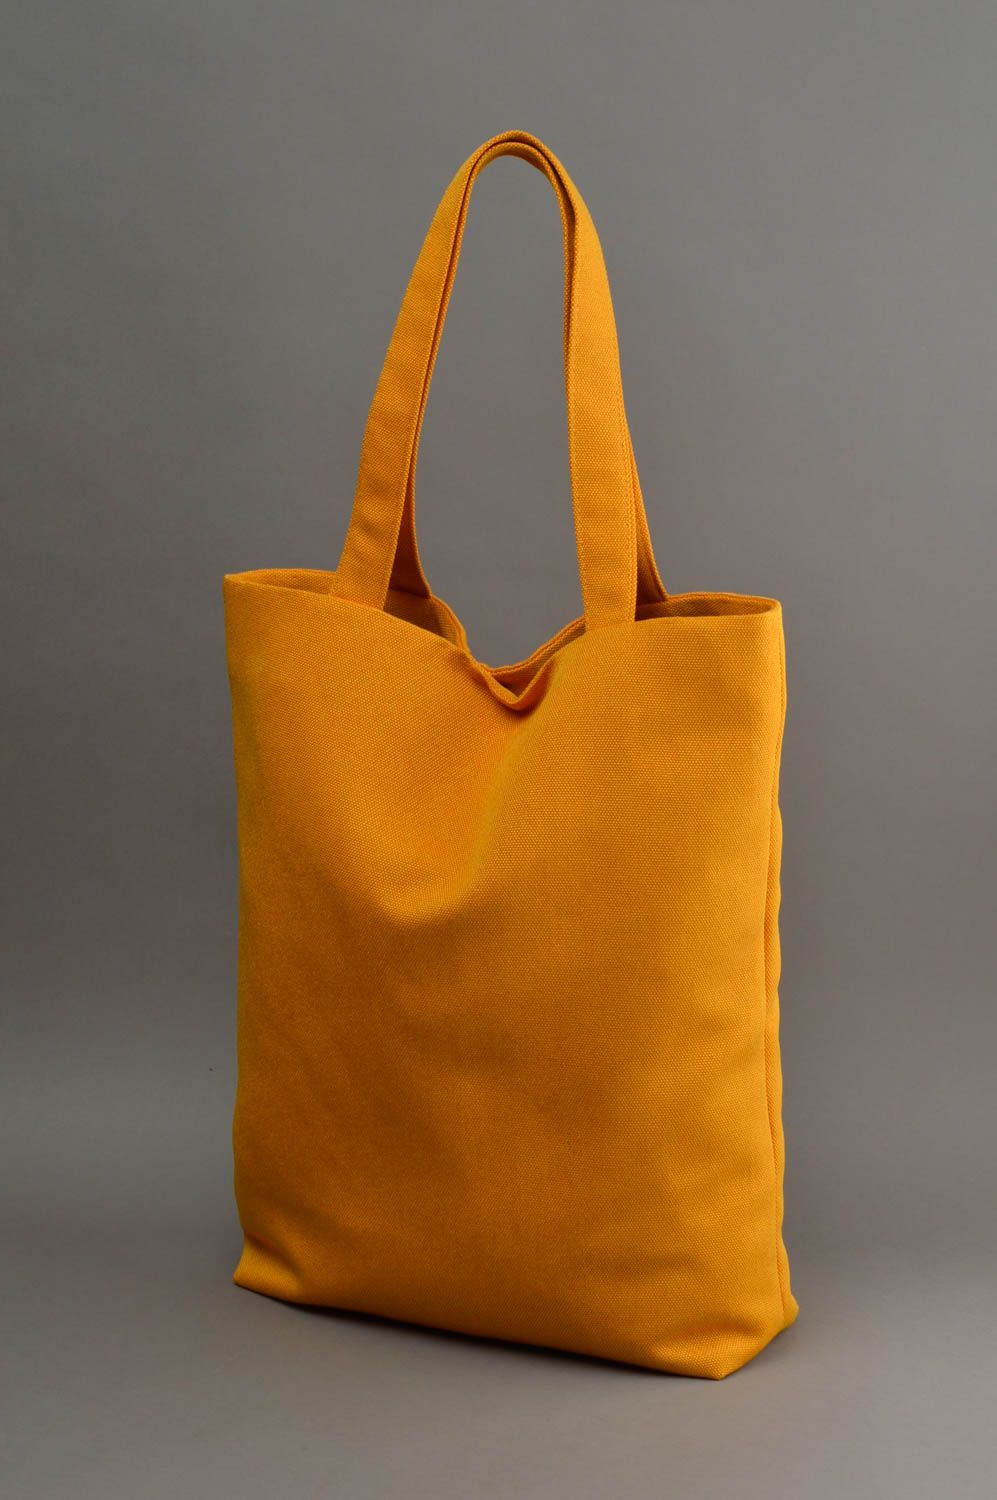 Big bag handmade fabric handbag bright orange designer purse gift for her photo 2